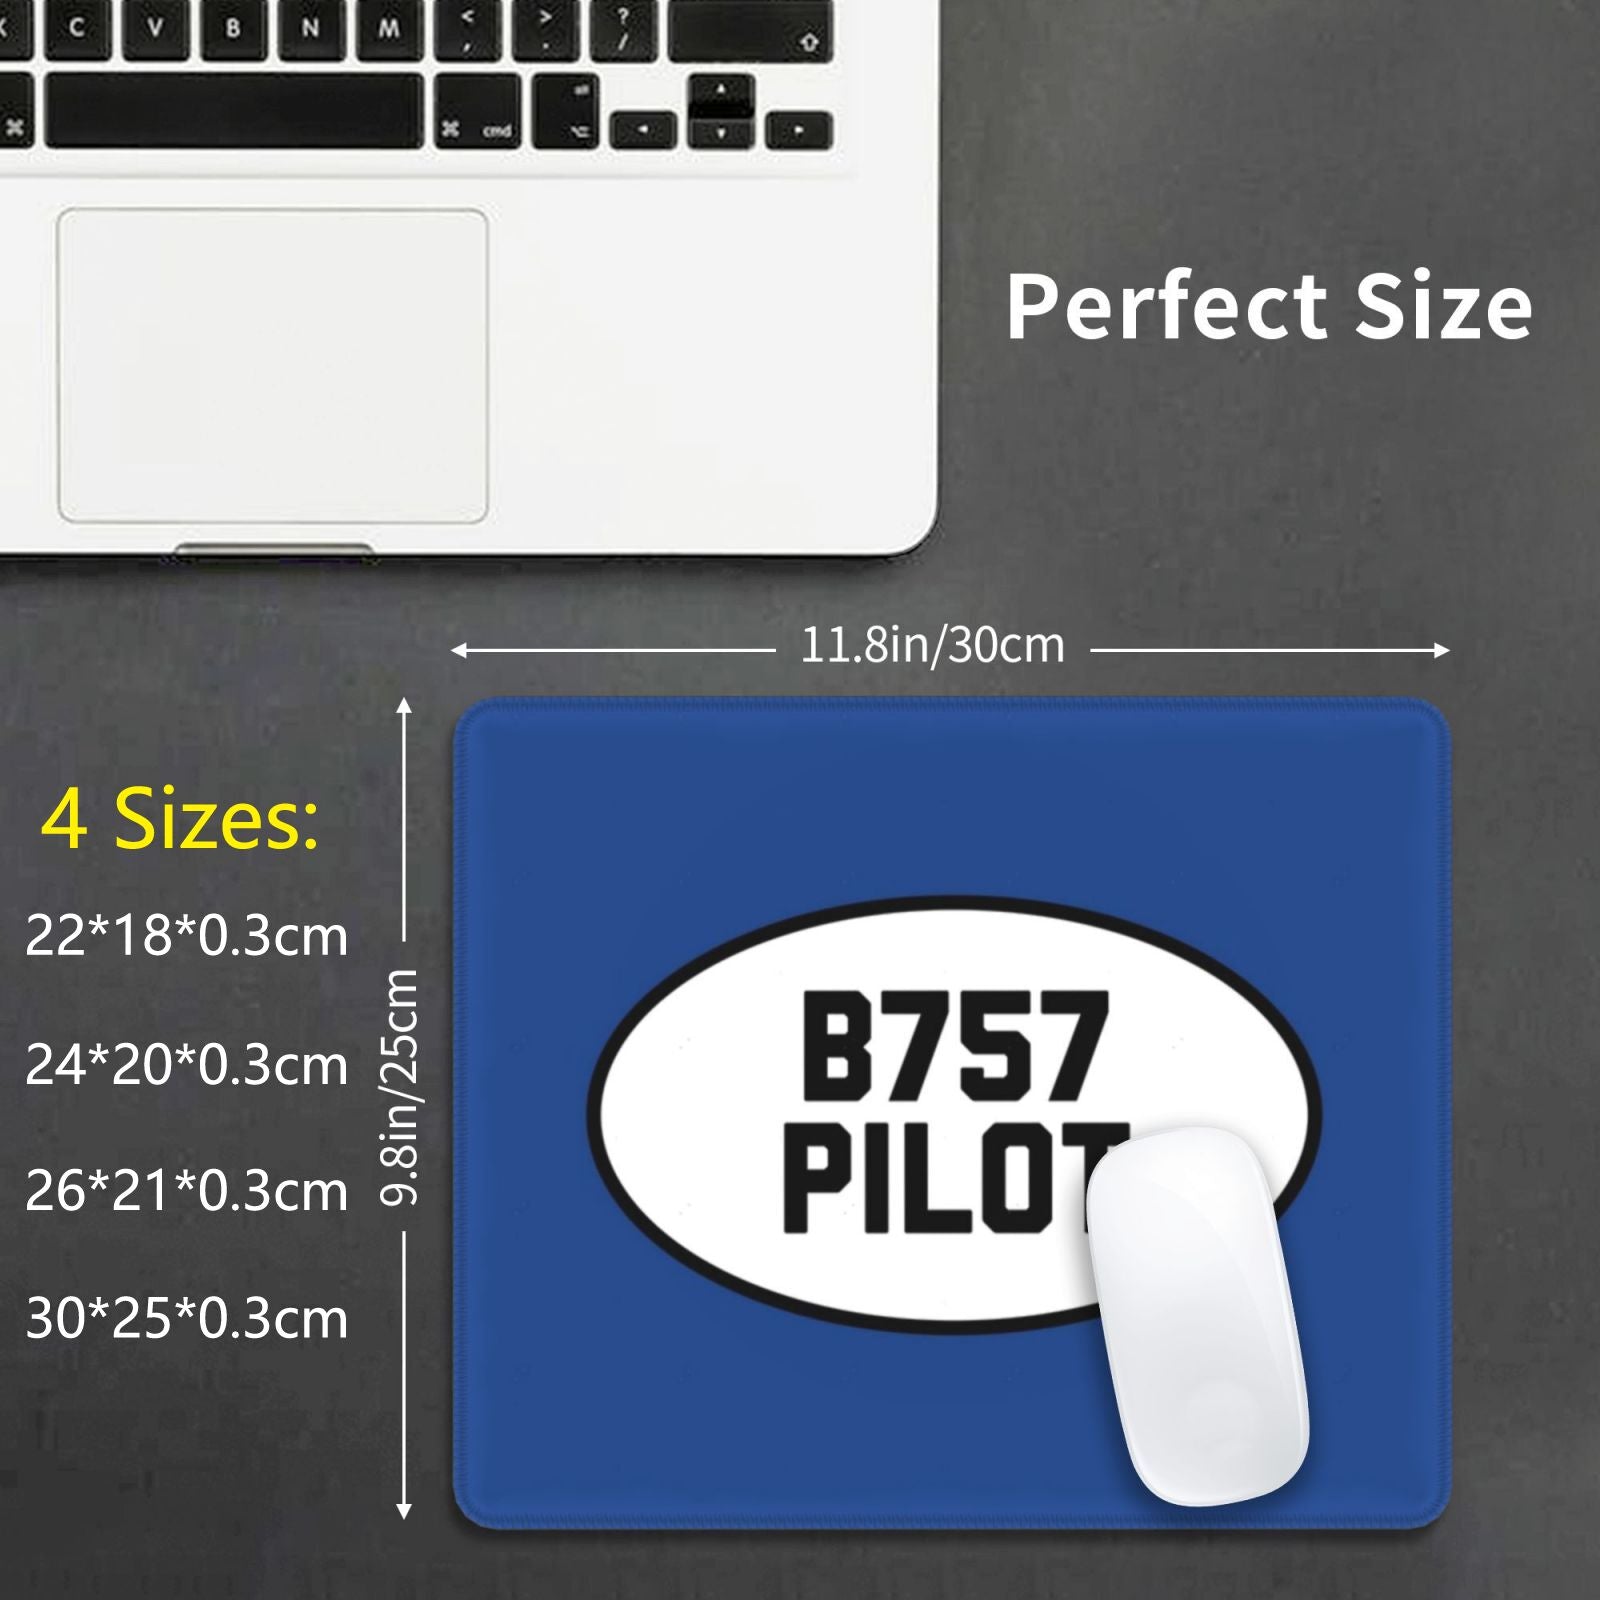 B757 Pilot — Boeing 757 Mouse Pad DIY Print Avgeek Pilot Pilot In Command Student Pilot Aviation General